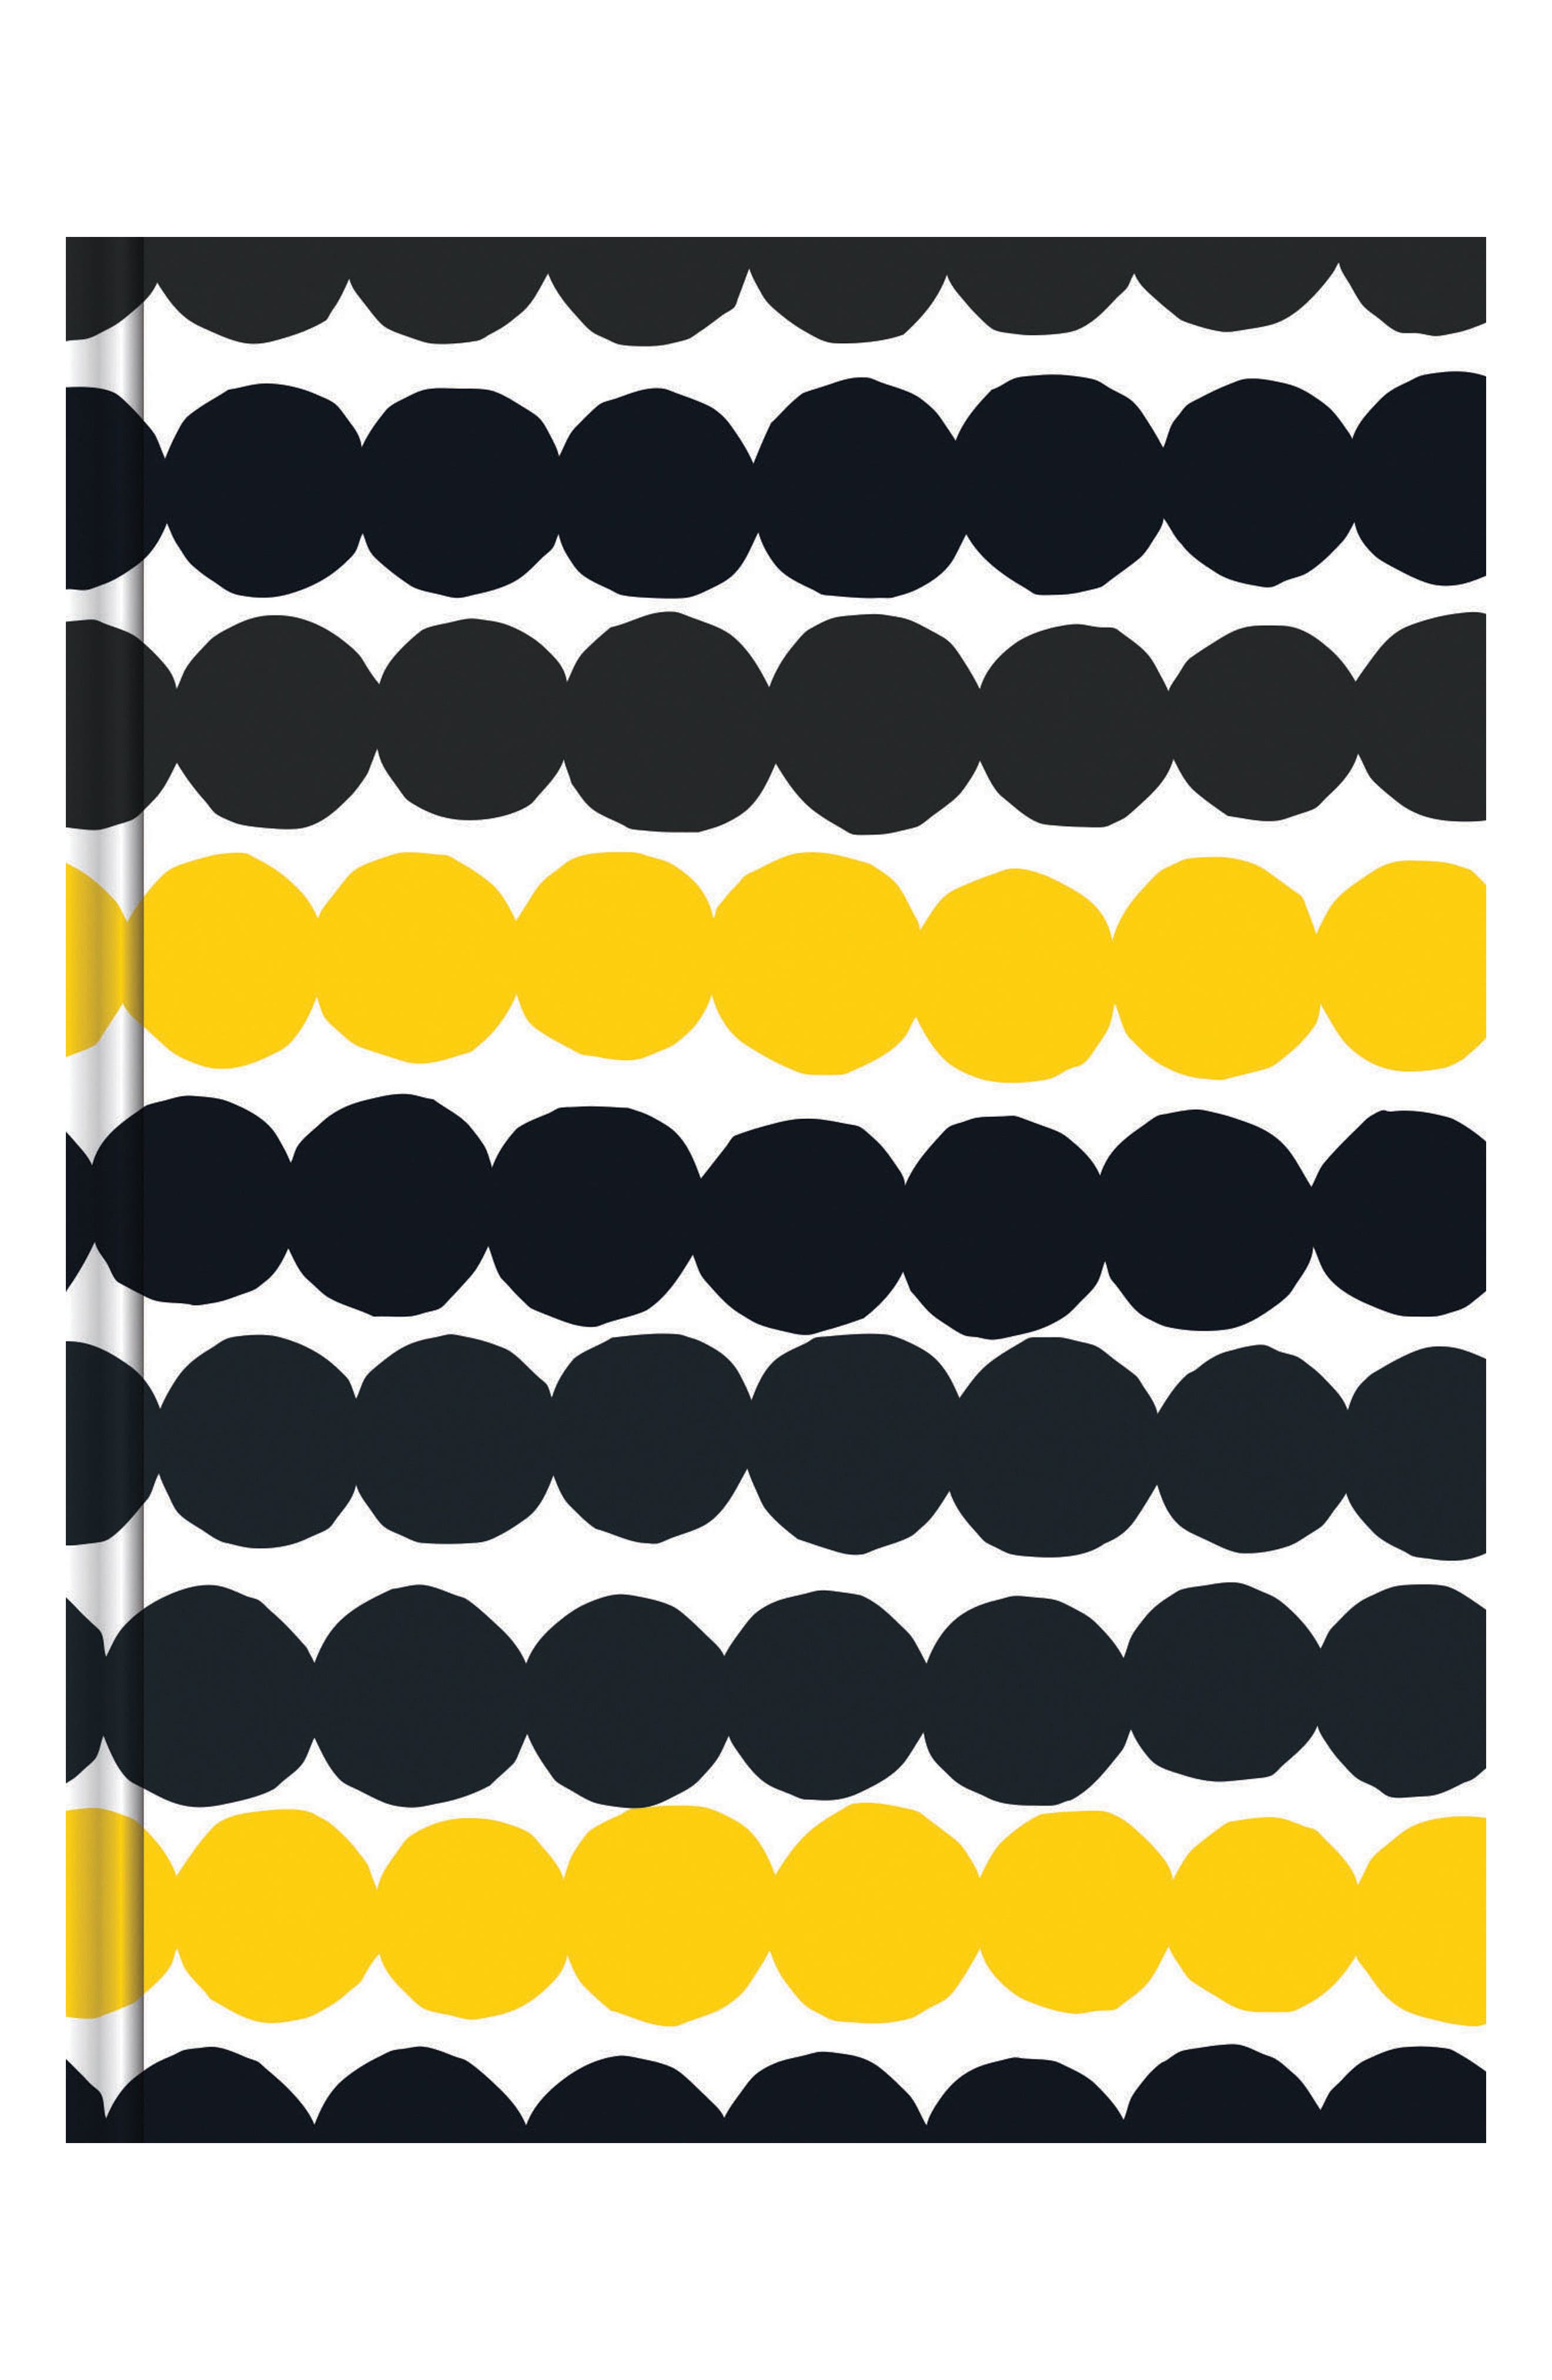 ISBN 9781452138787 product image for Chronicle Books Marimekko Fabric Wrapped Journal - Yellow | upcitemdb.com